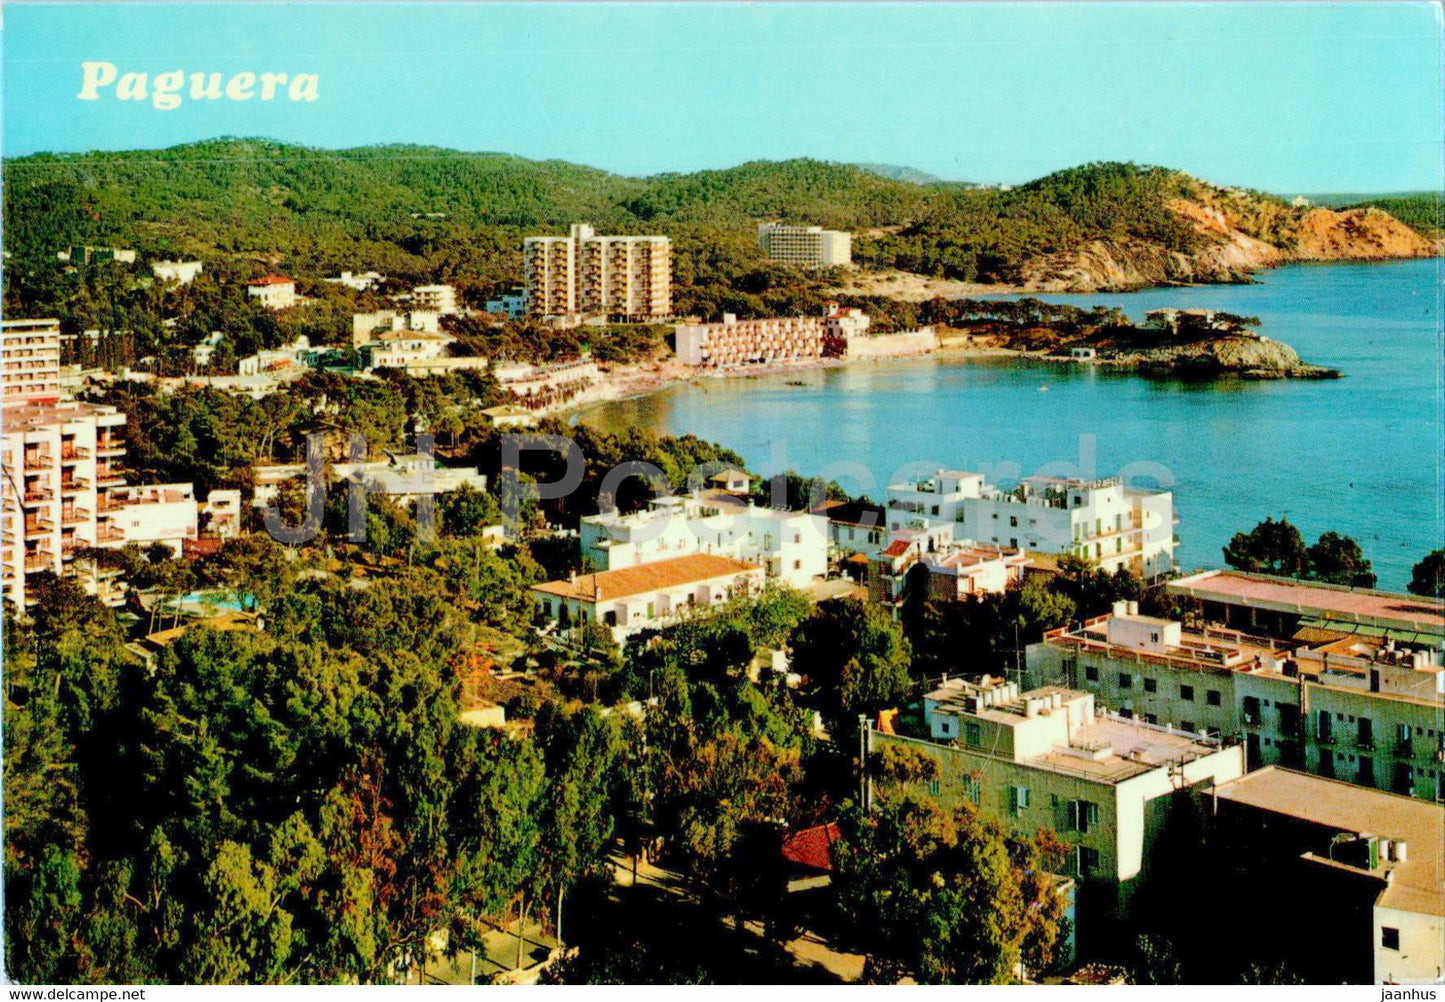 Paguera - Vista parcial - Mallorca - 2912 - Spain - unused - JH Postcards